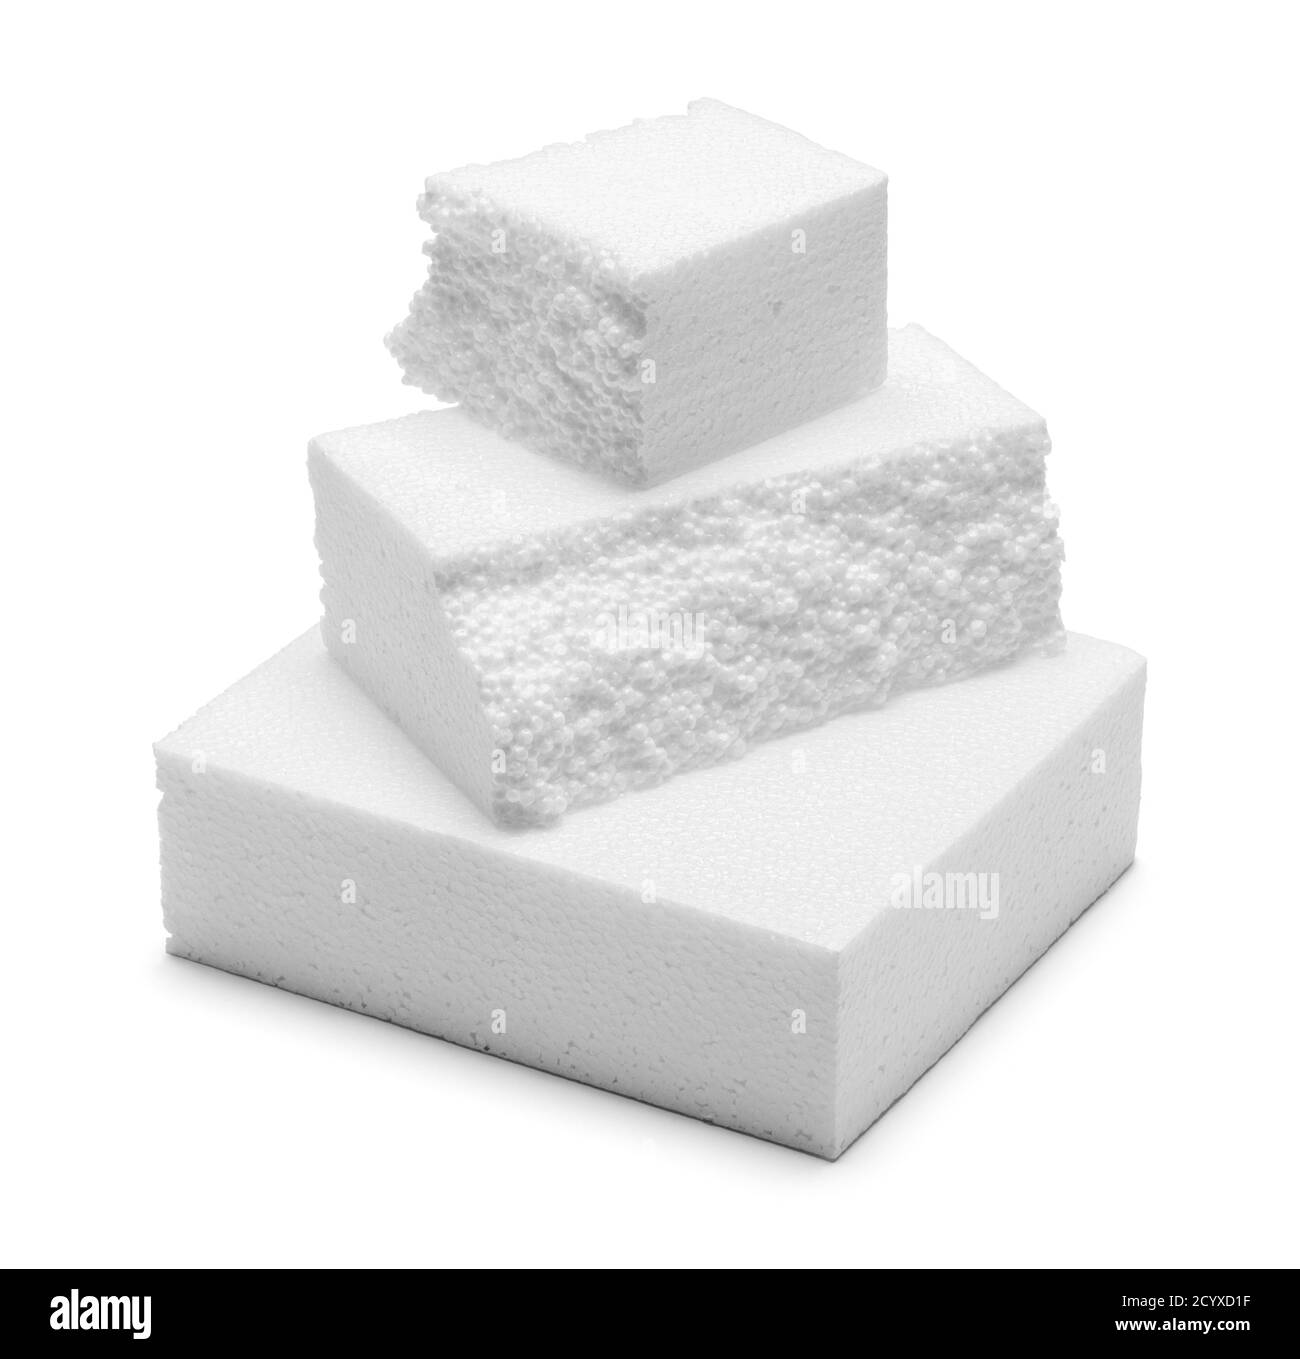 Styrofoam blocks hi-res stock photography and images - Alamy